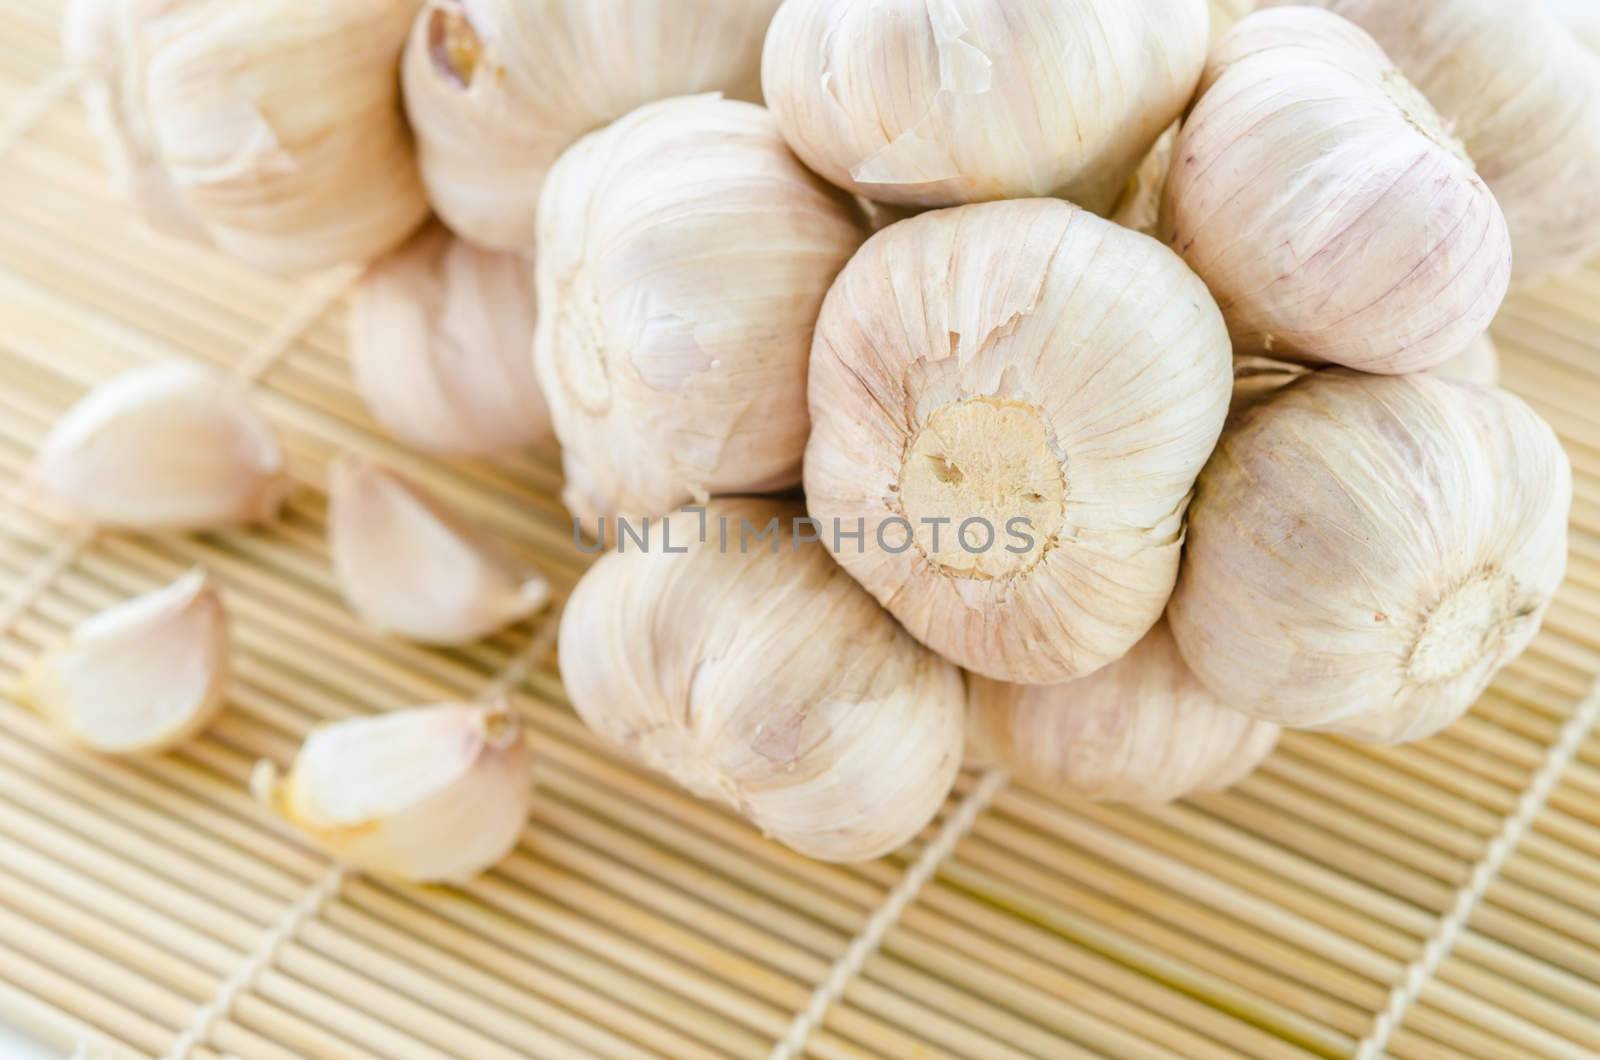 Organic garlic whole by Gamjai